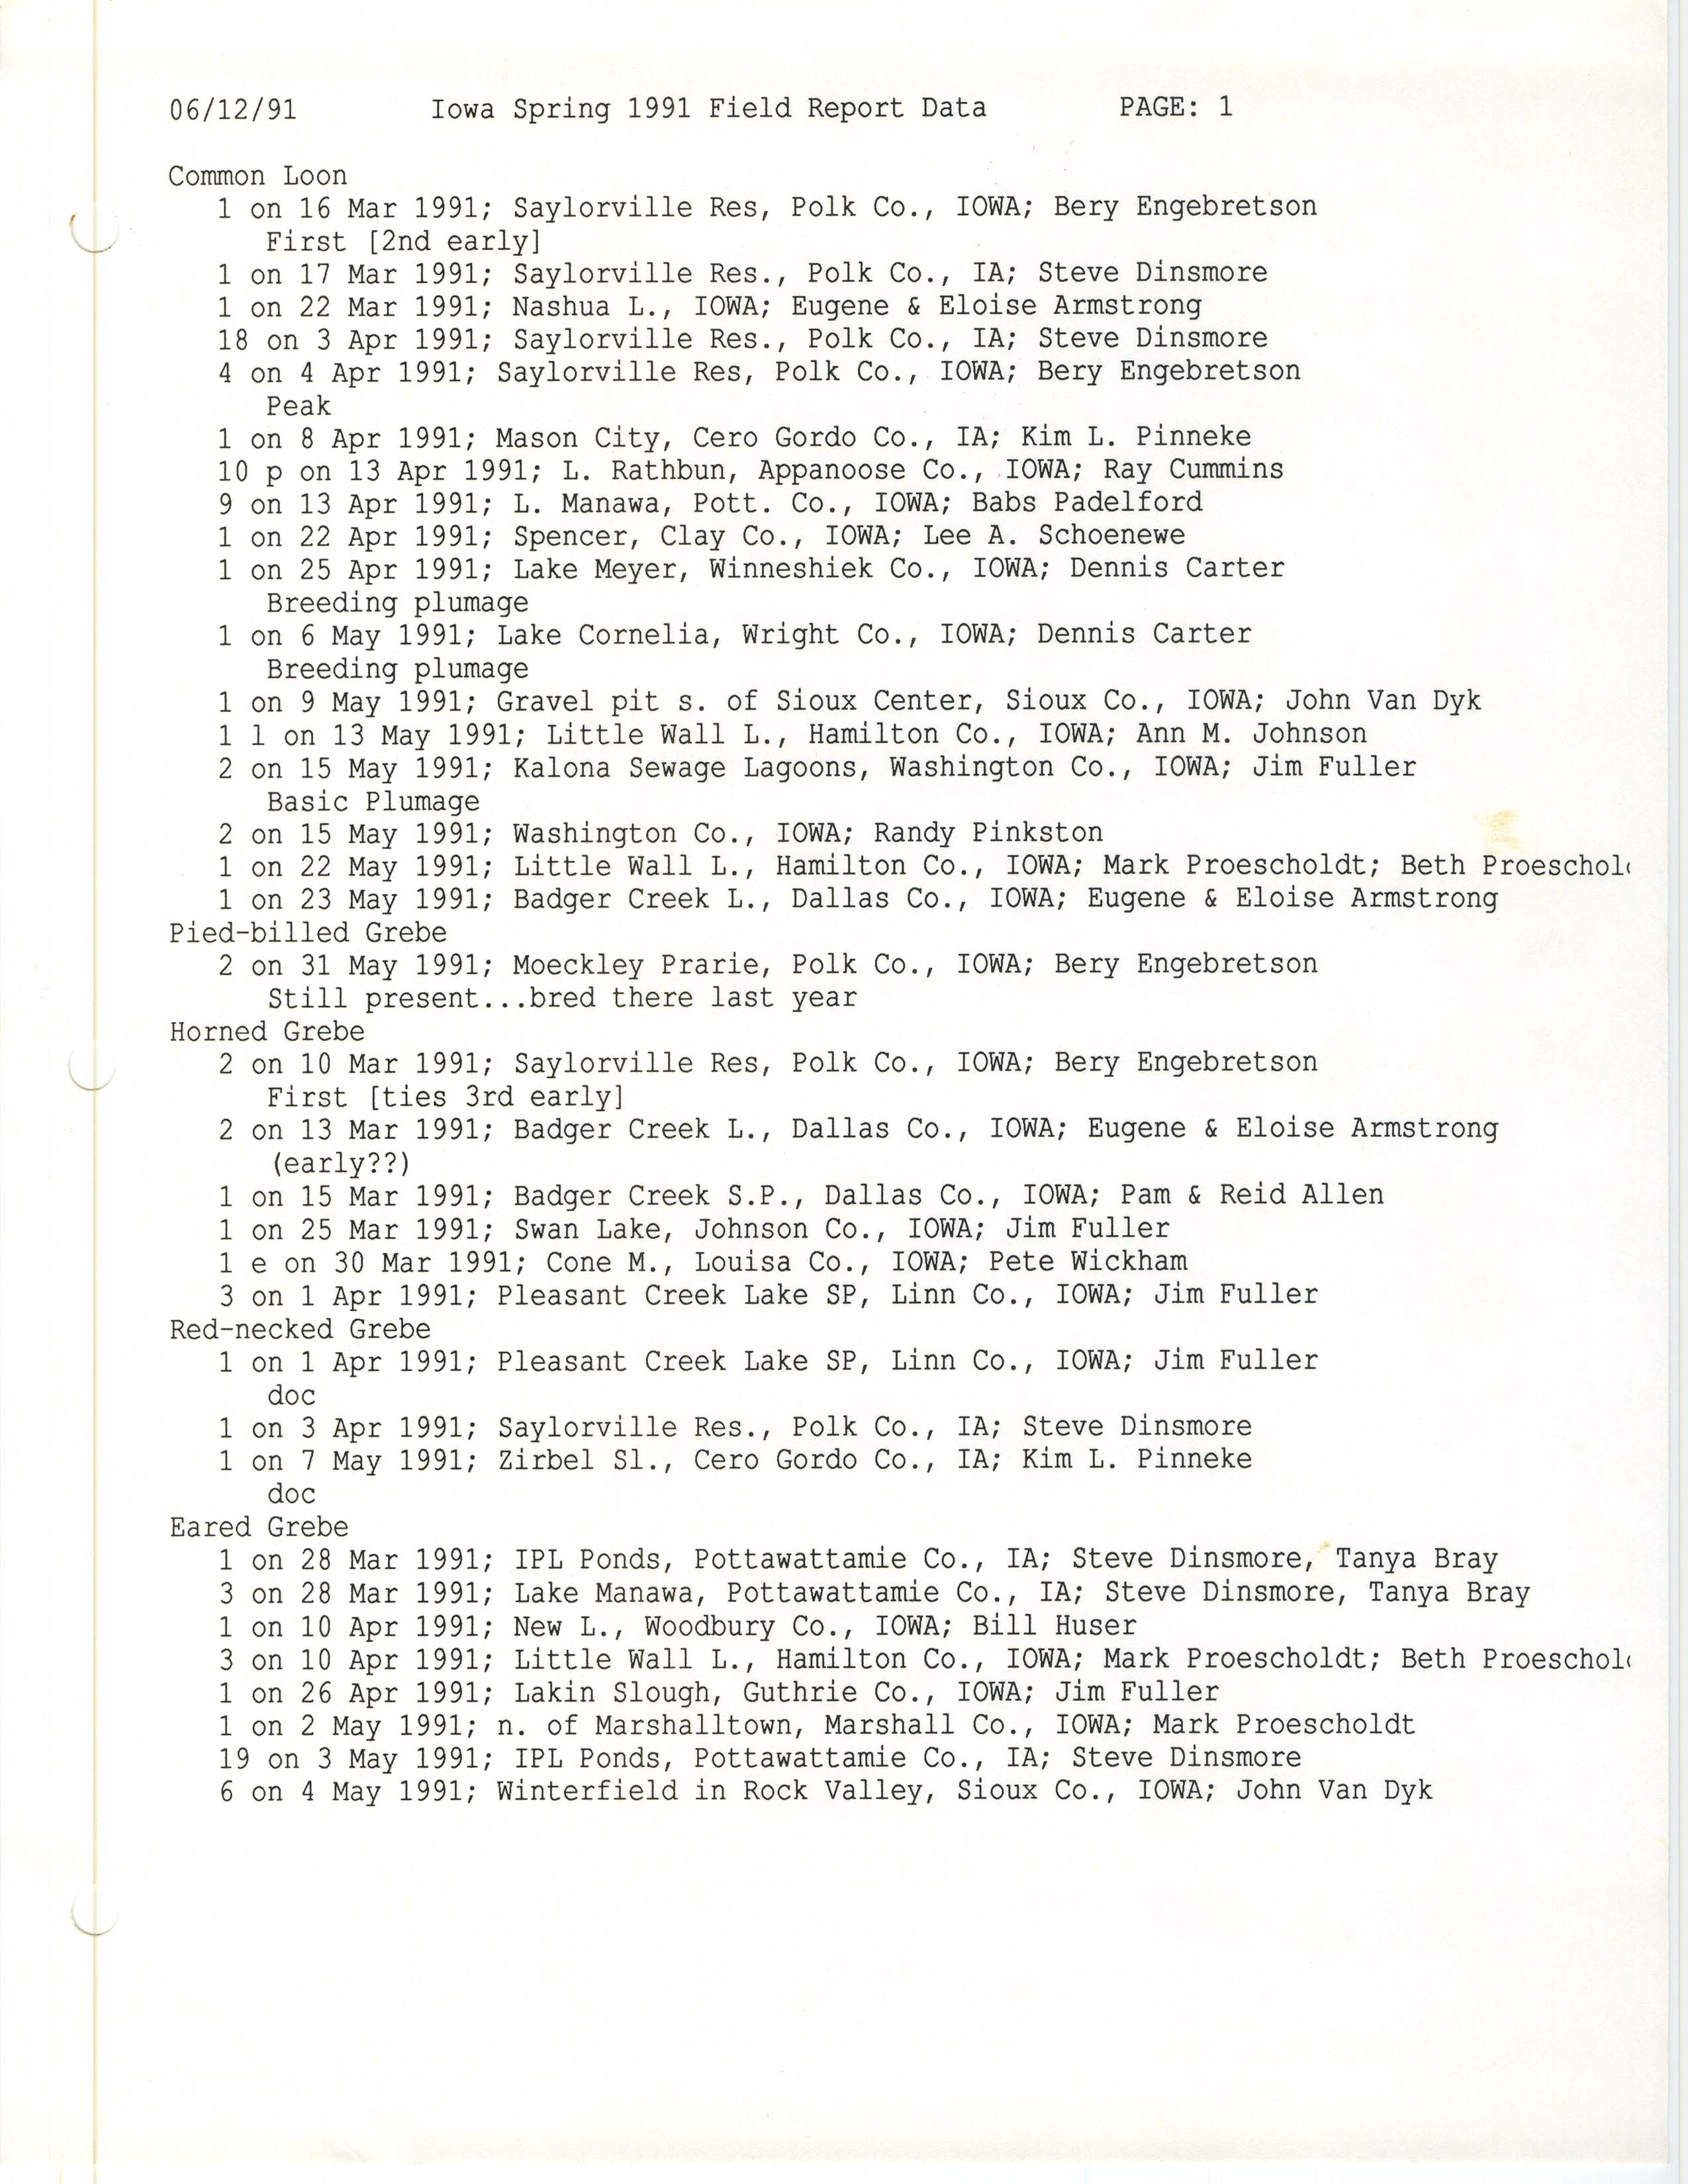 Field reports, Iowa Ornithologists' Union, spring 1991